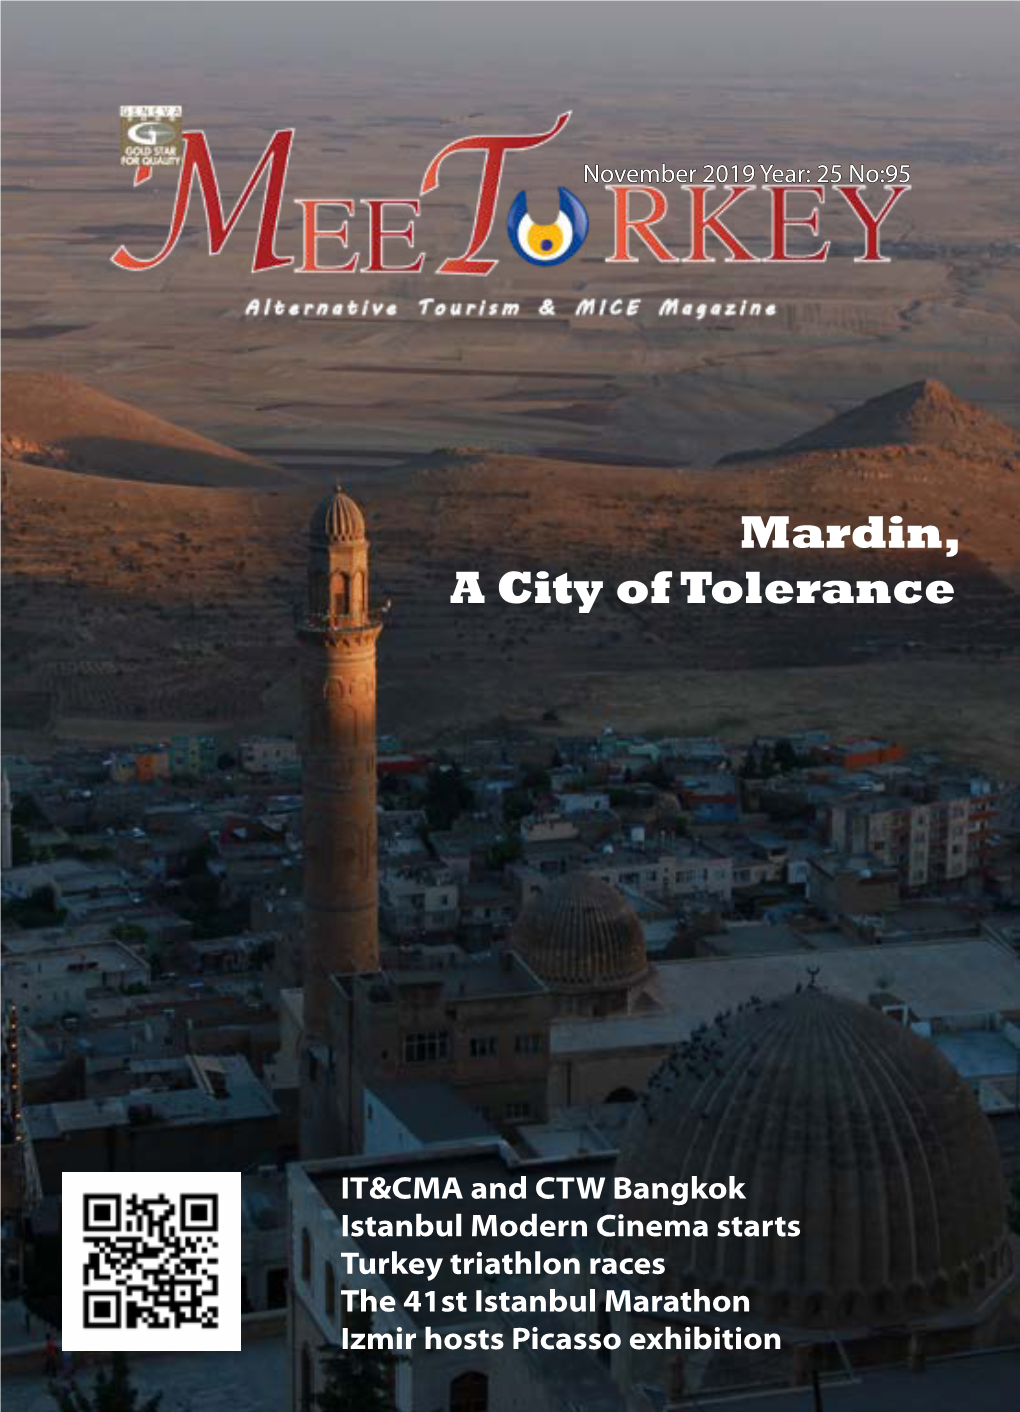 Mardin, a City of Tolerance